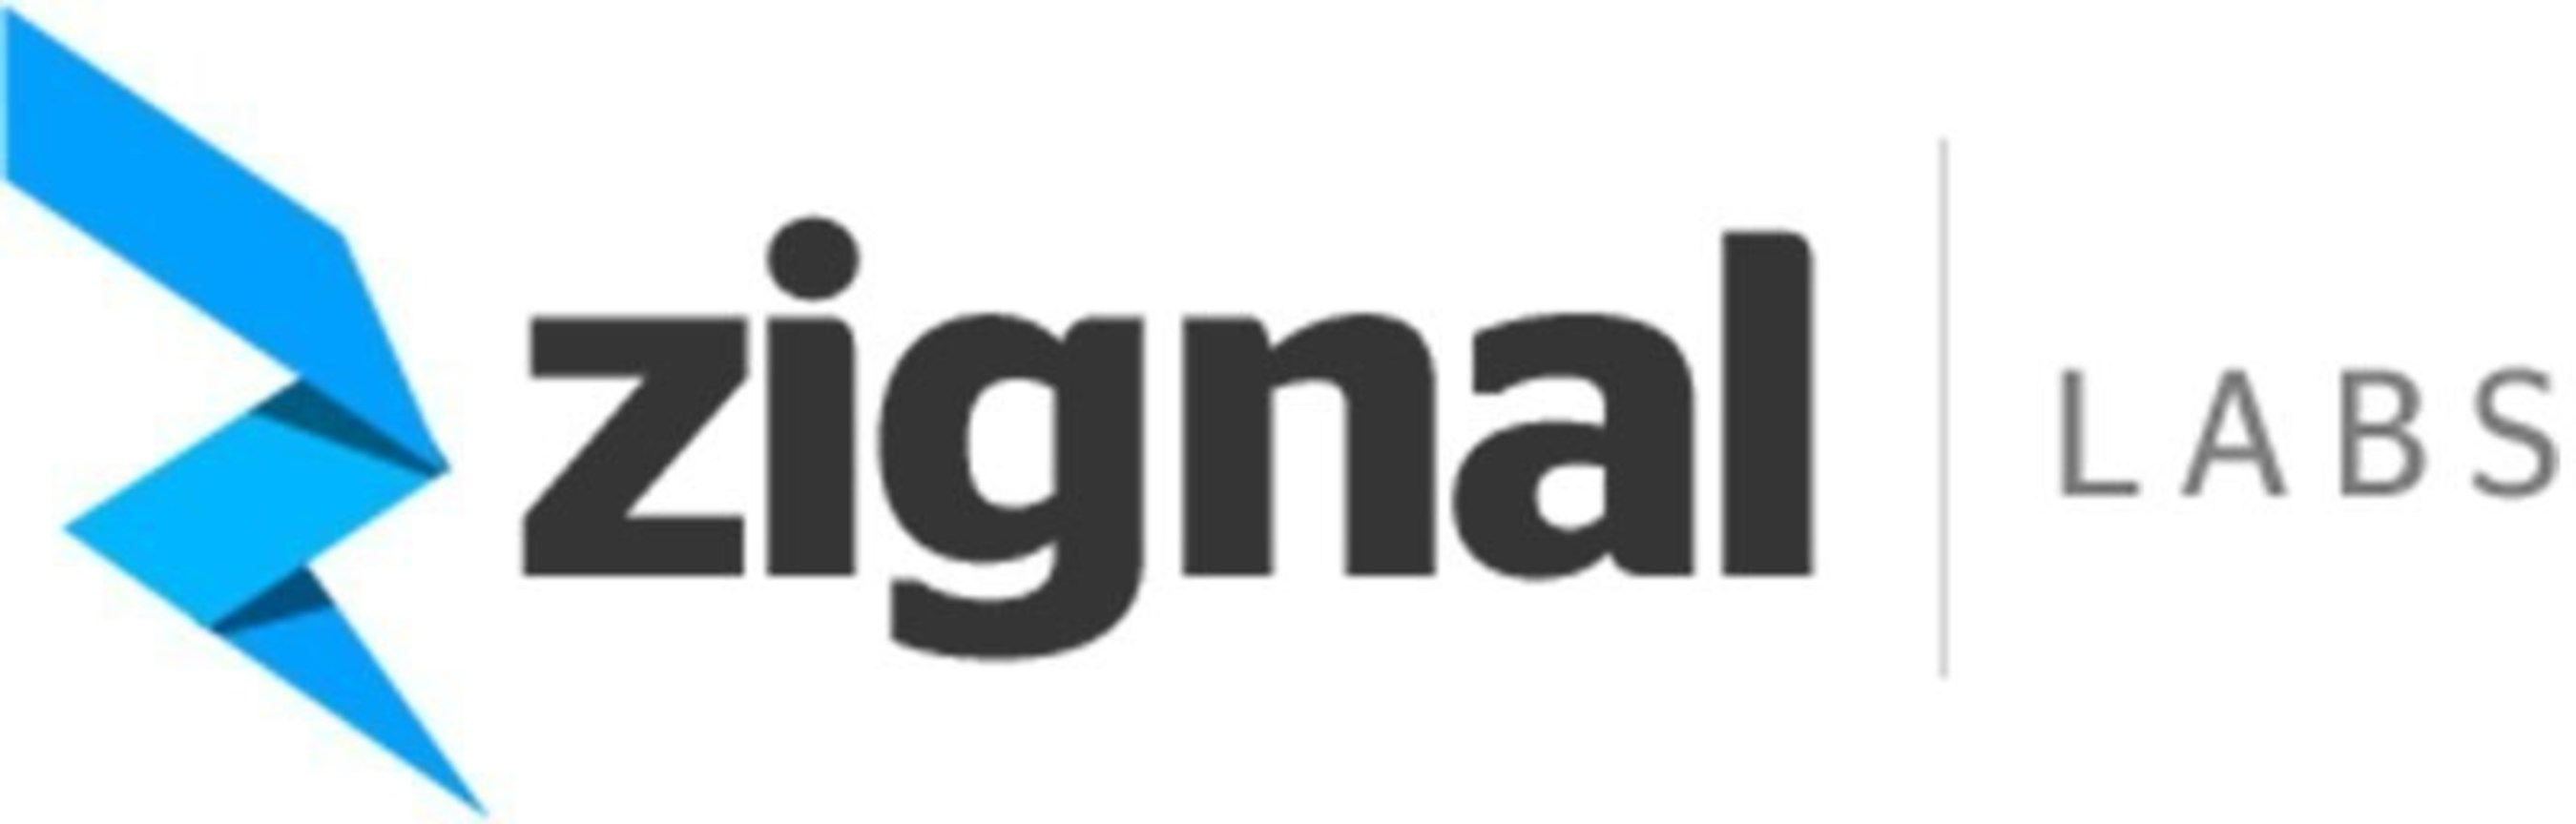 Zignal Labs logo